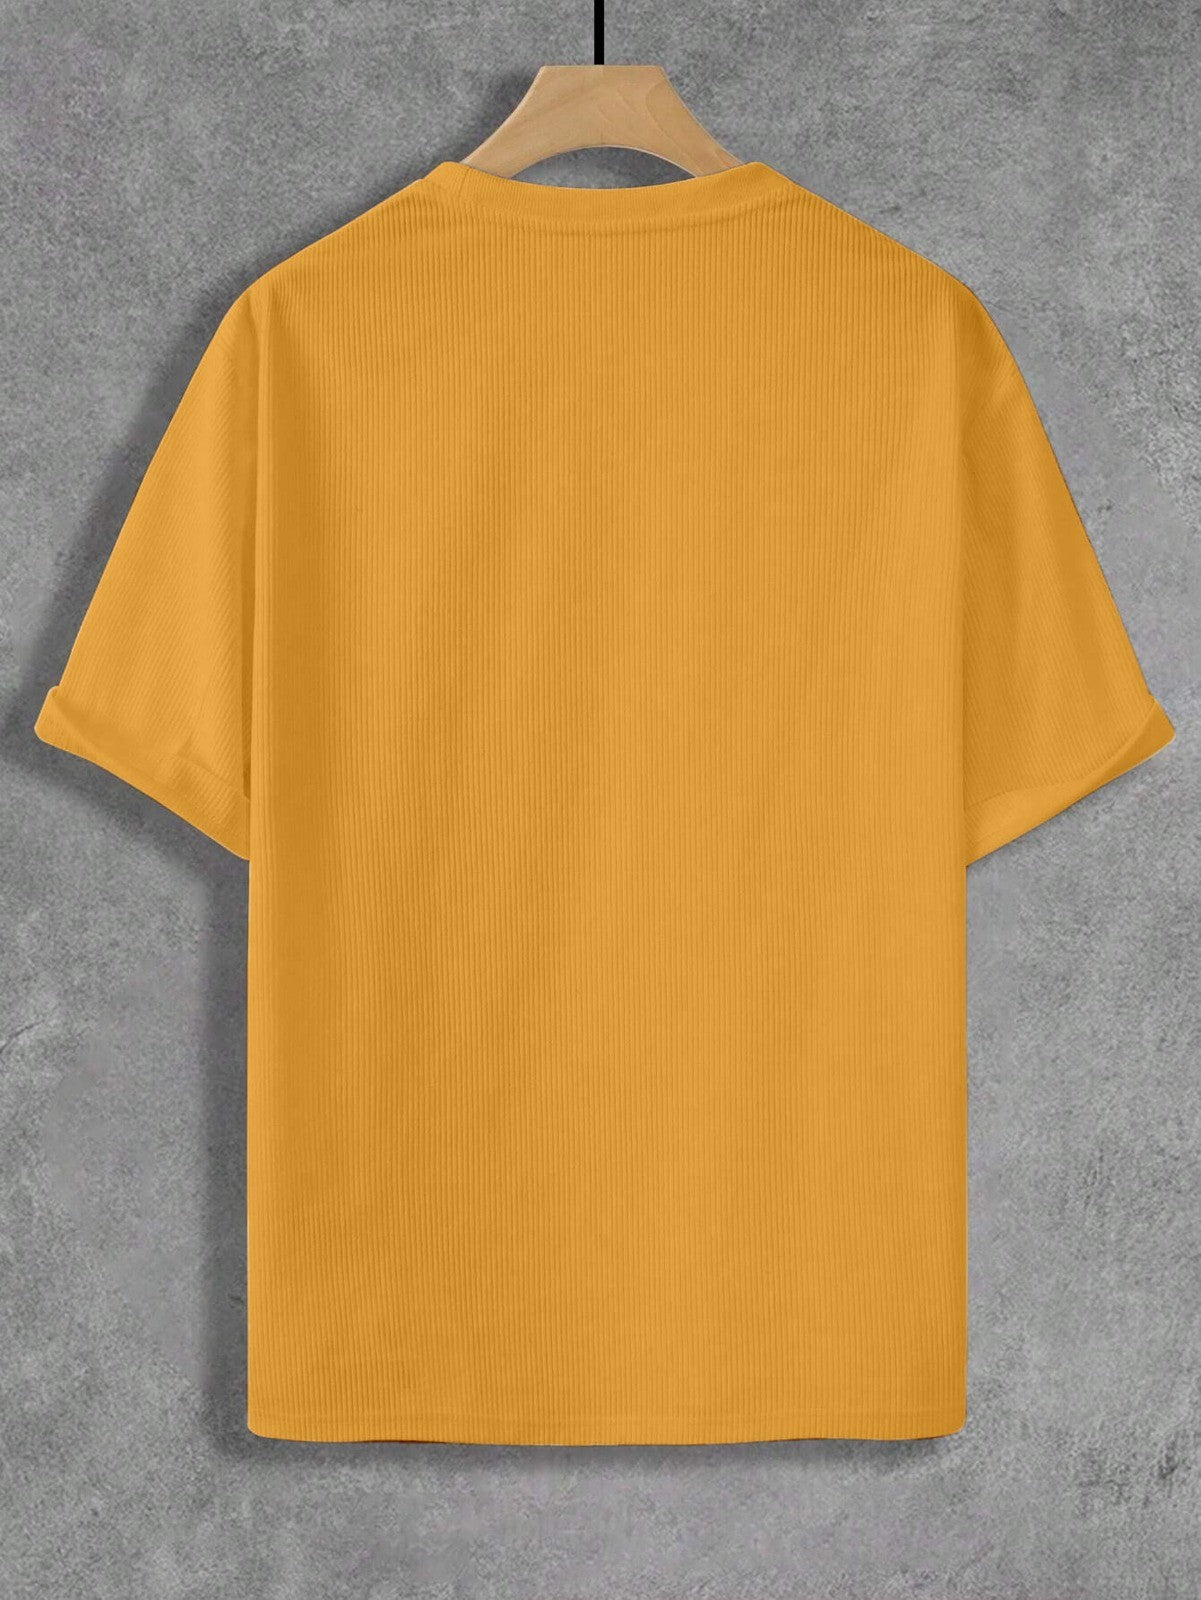 Mustard Over Sized Fit T-shirt plain T-Shirt